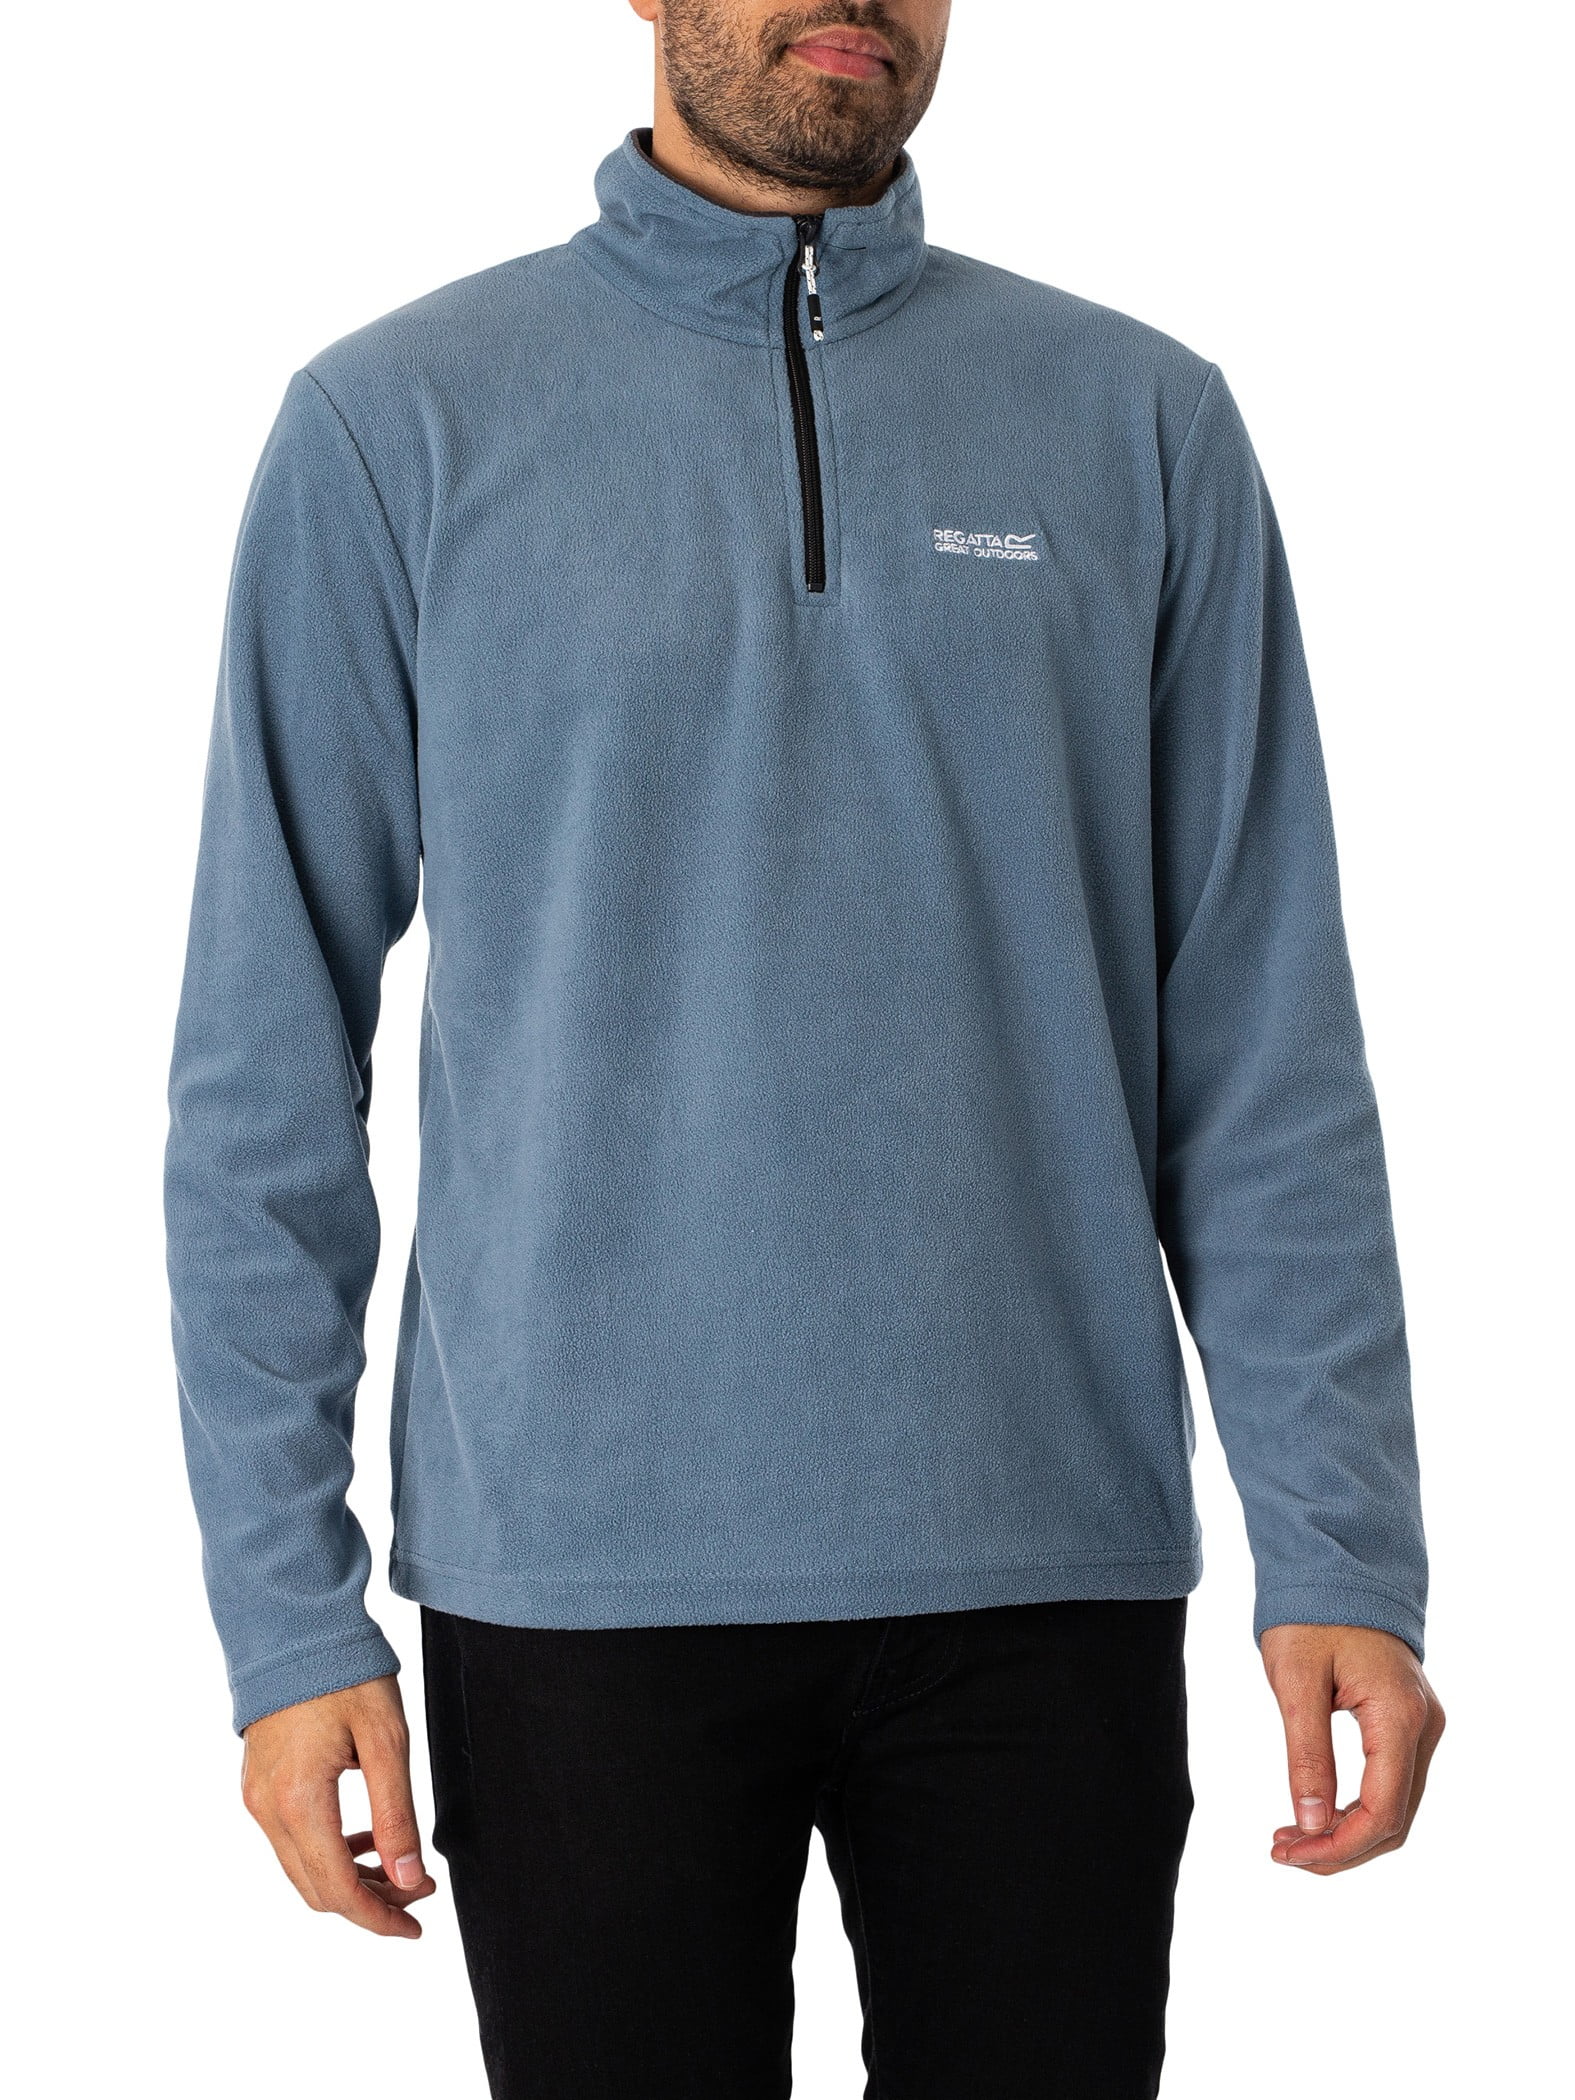 Regatta Thompson Lightweight Half Zip Sweatshirt, Grey - Walmart.com